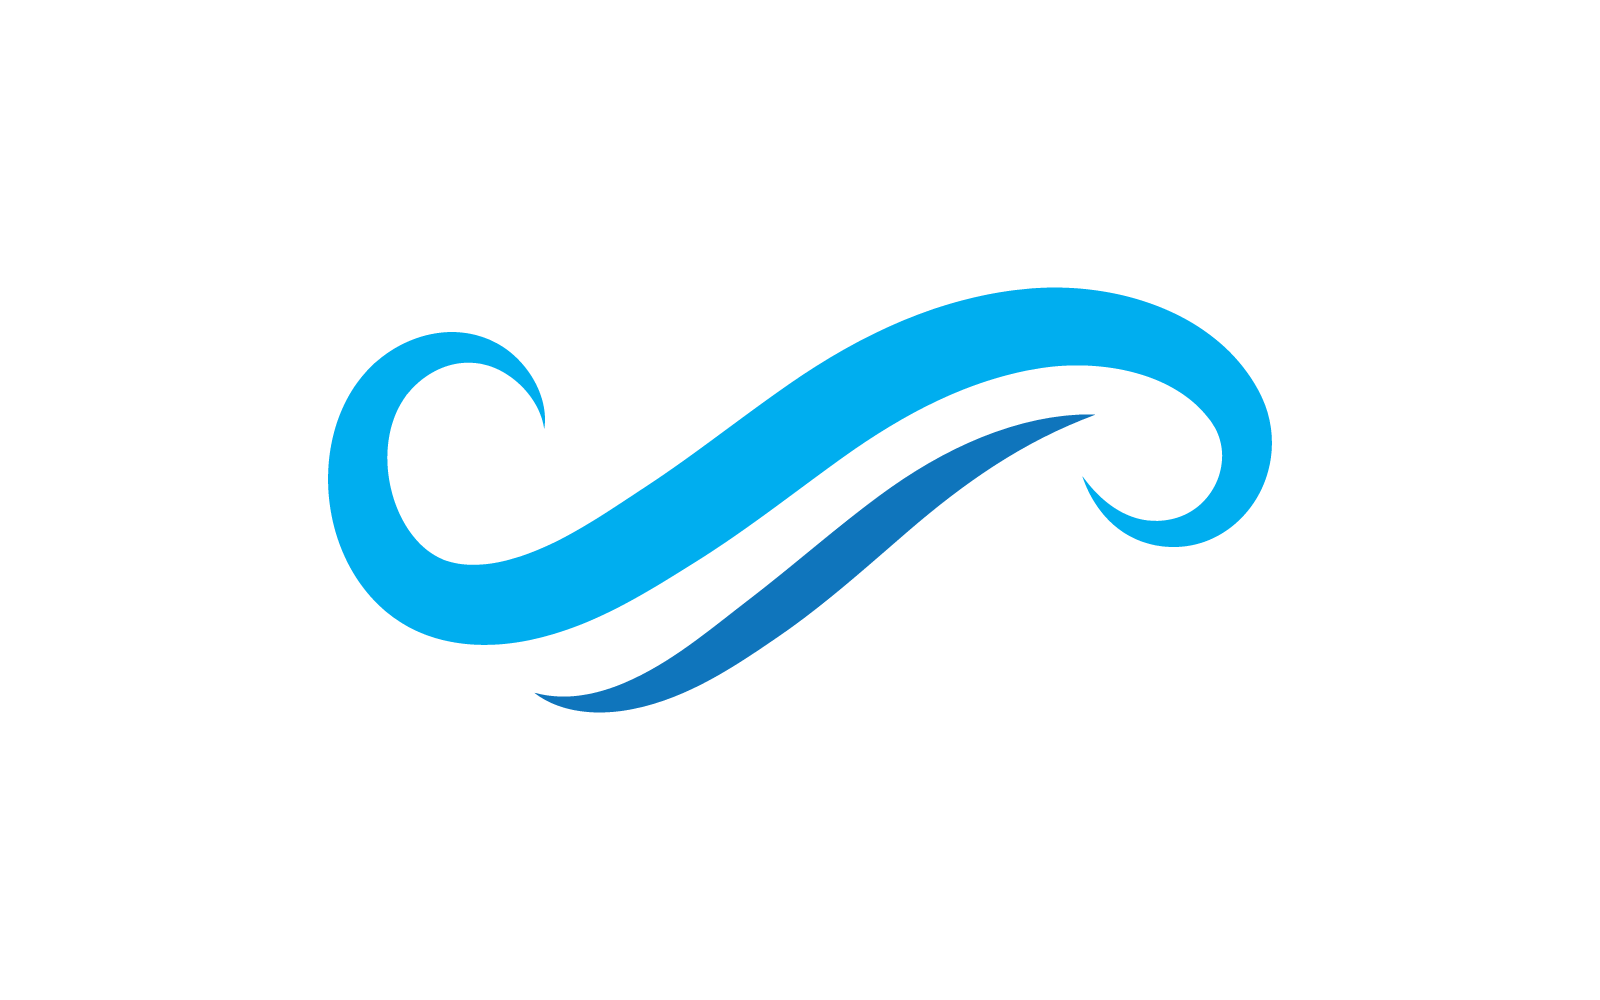 Water Wave illustration vector design template